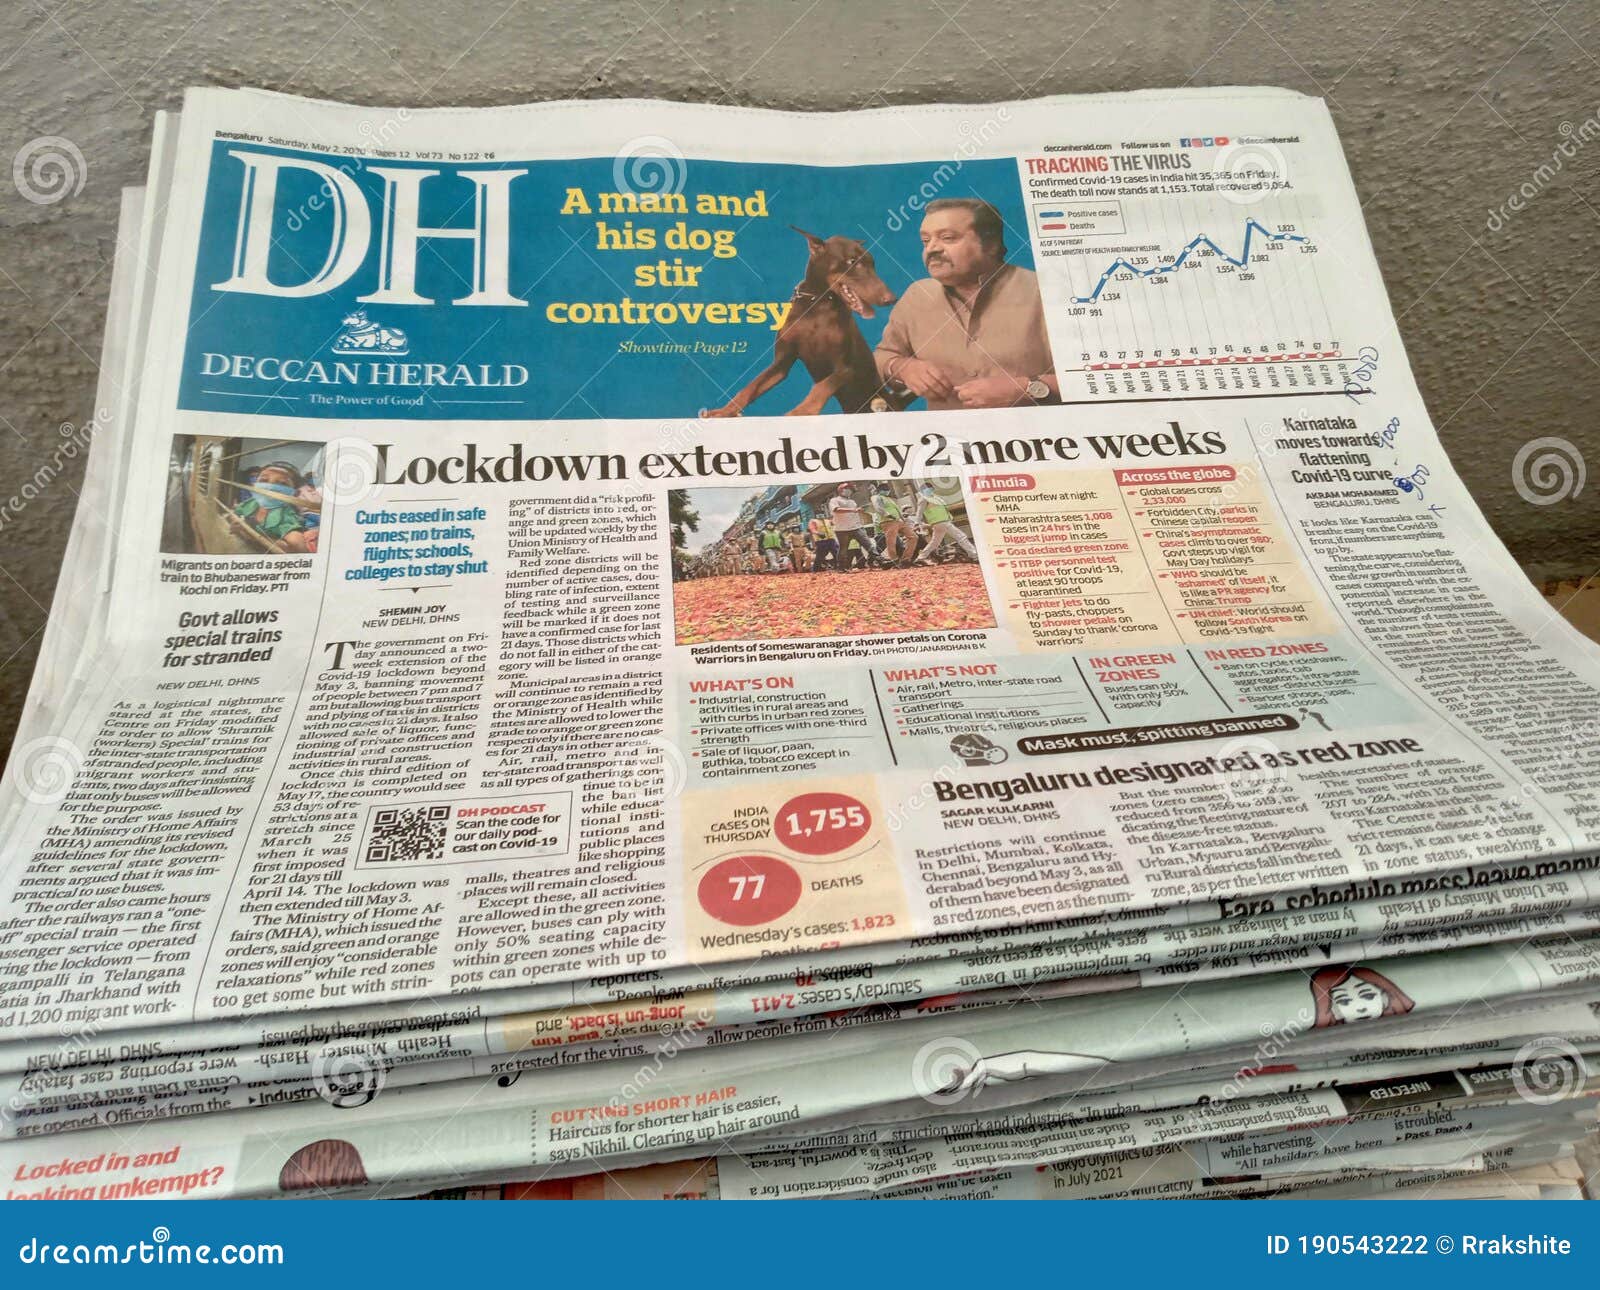 Herald deccan Deccan Herald